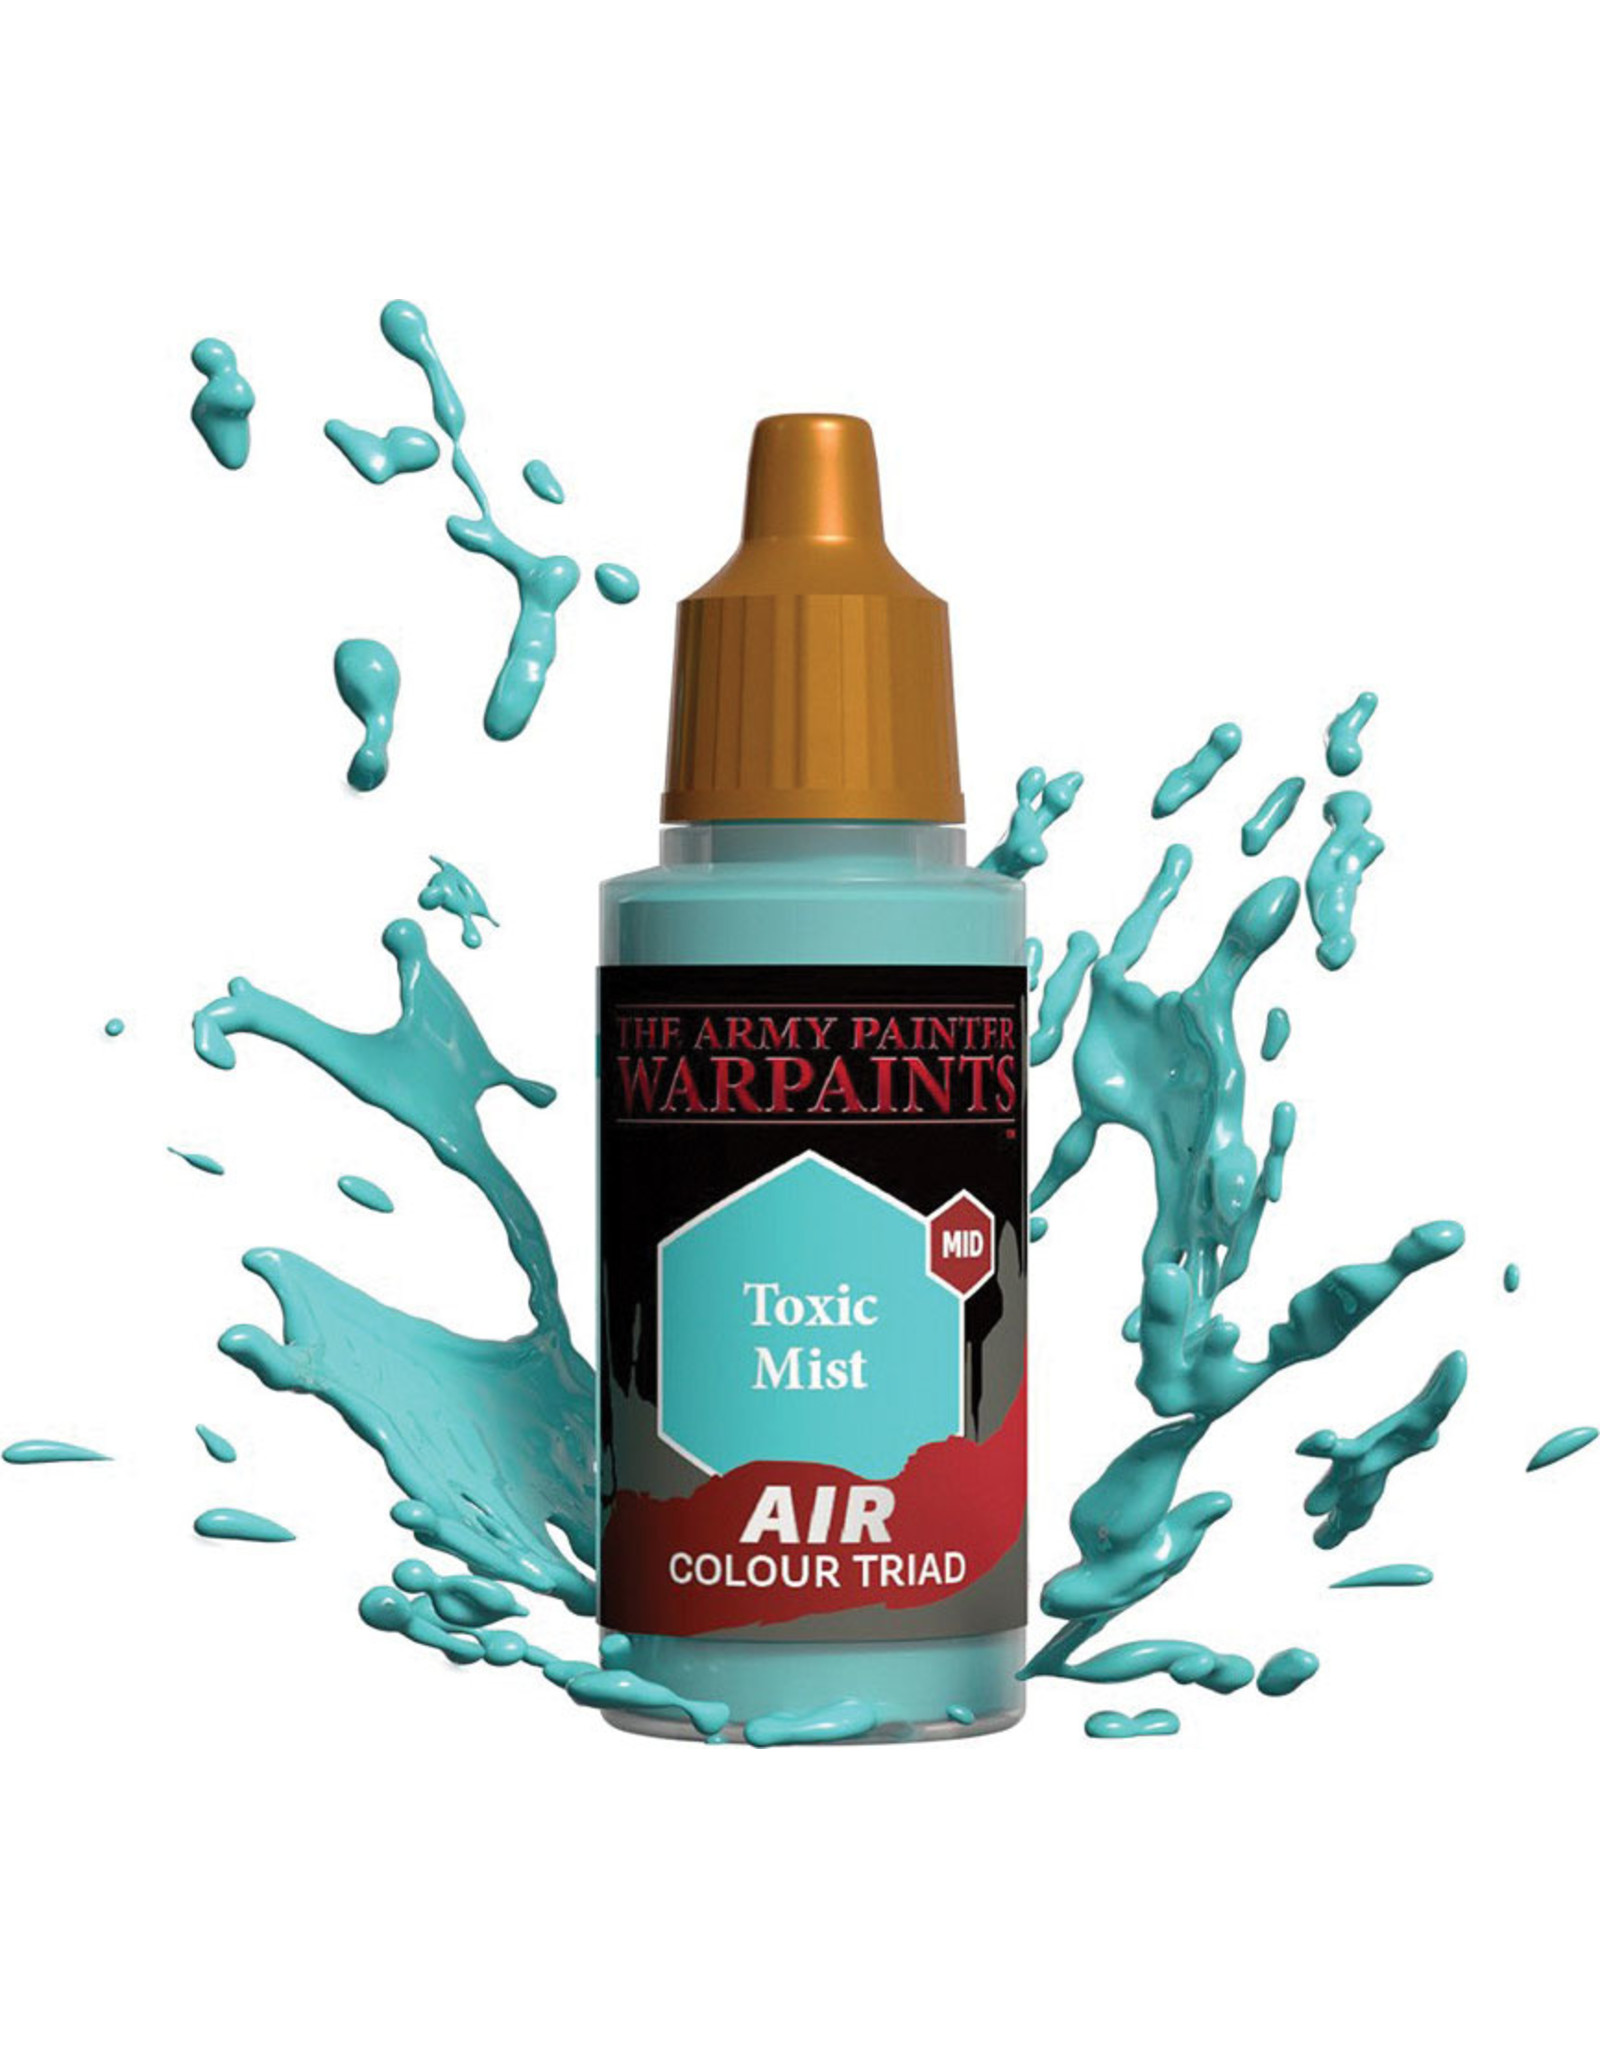 Army Painter Warpaint Air: Toxic Mist, 18ml.